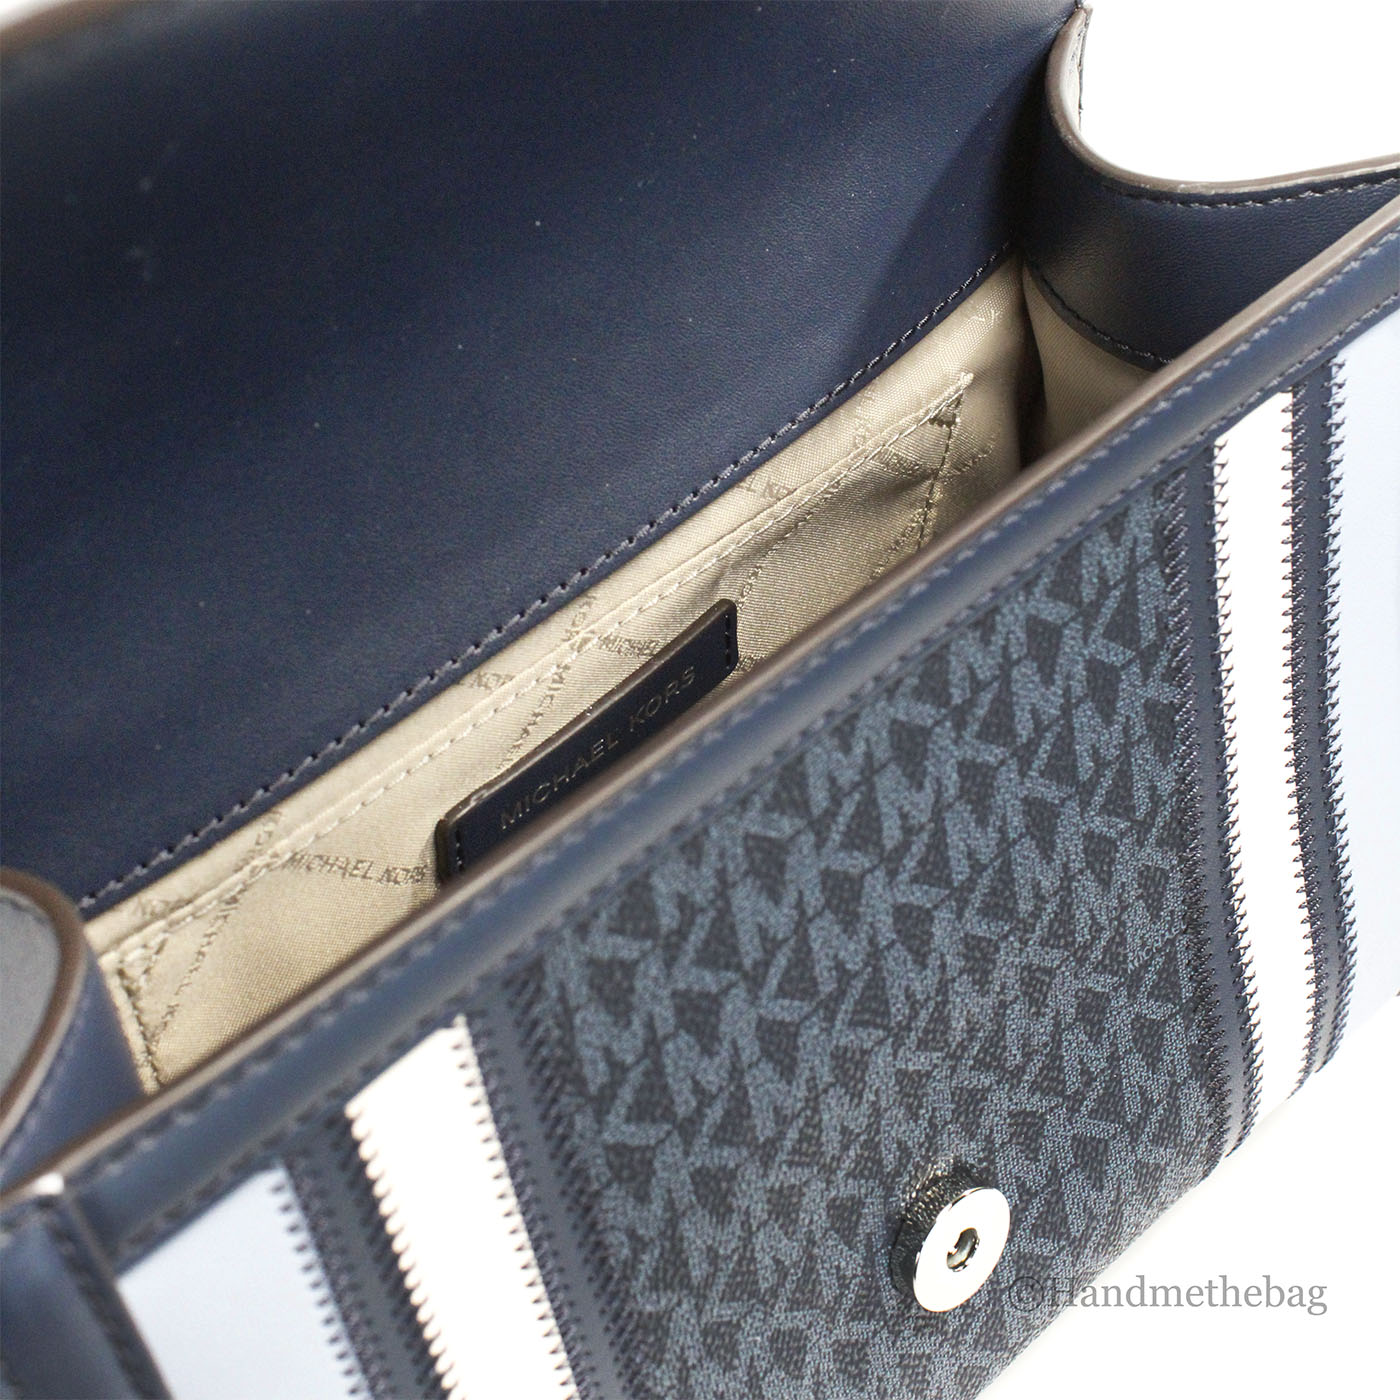 Michael Kors Whitney Medium Navy Color-Block Chain Shoulder Bag